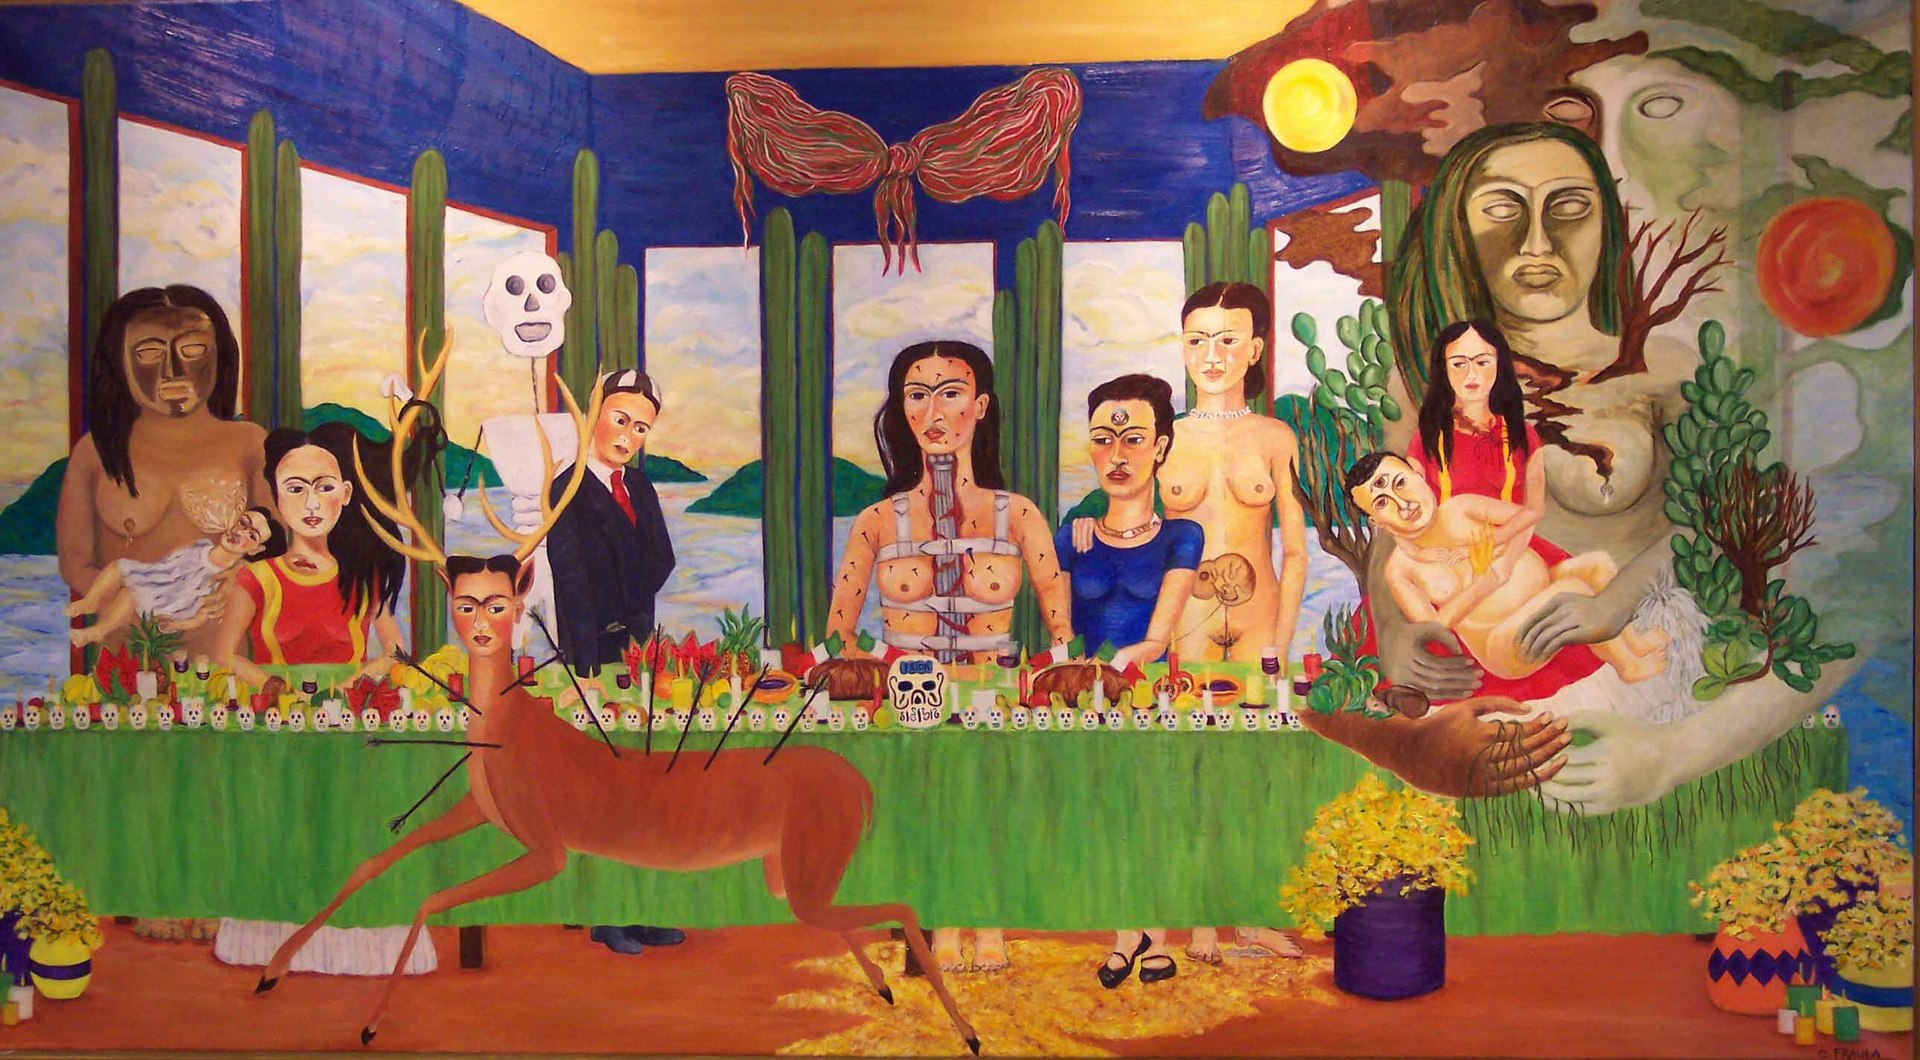 Buy Childrens Mural Frida Kahlo Kids Wallpaper Black and Online in India   Etsy